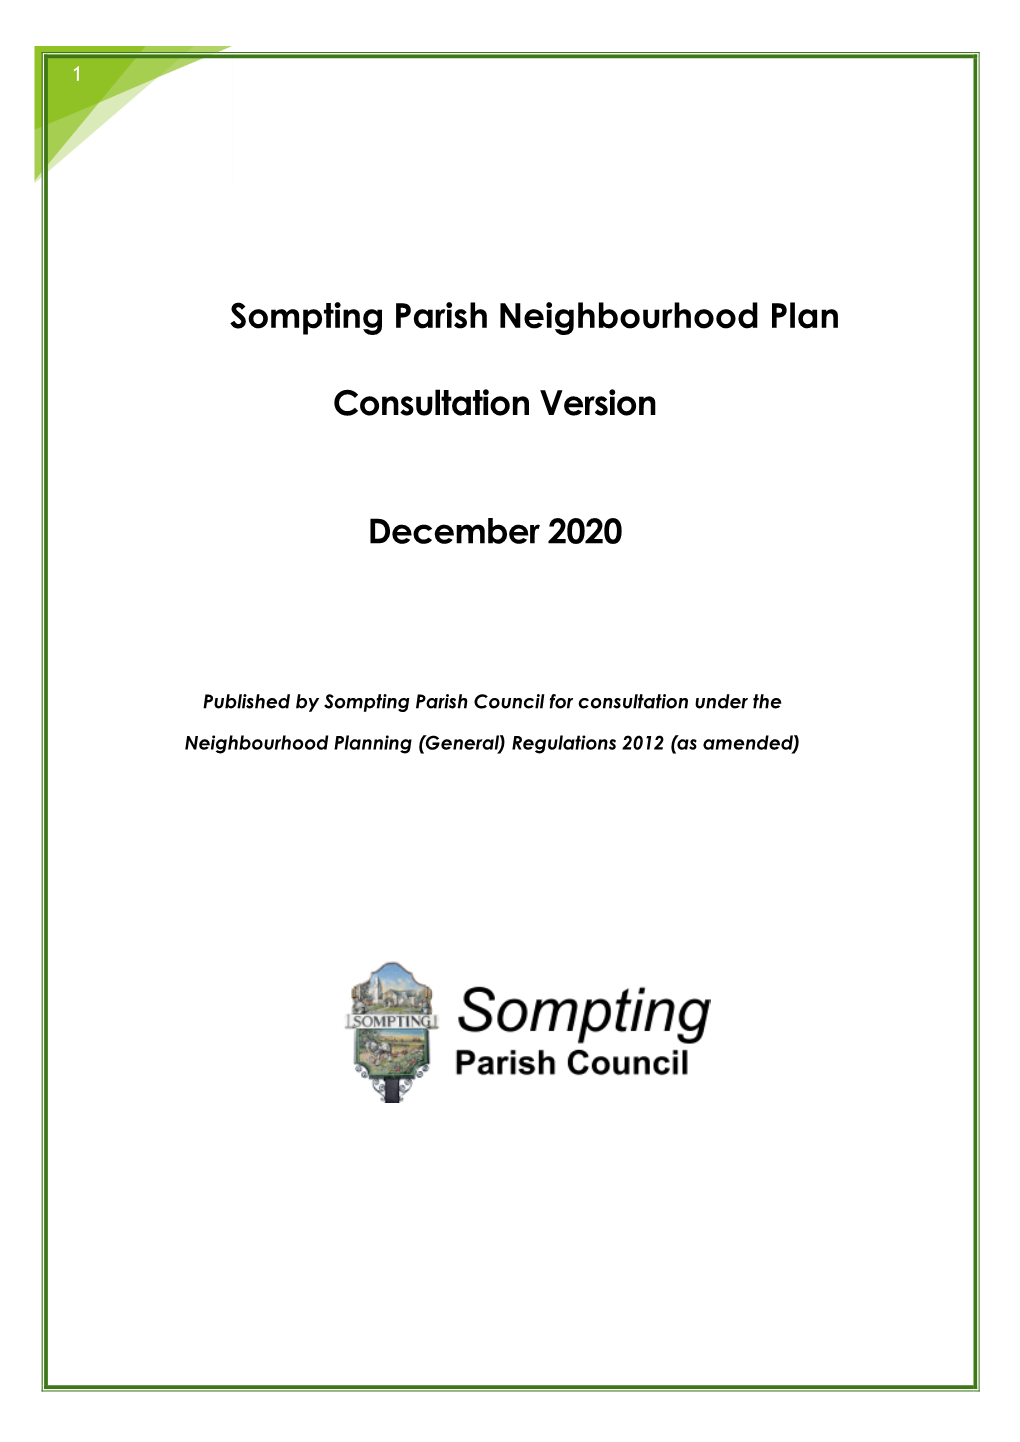 Sompting Parish Neighbourhood Plan Consultation Version December